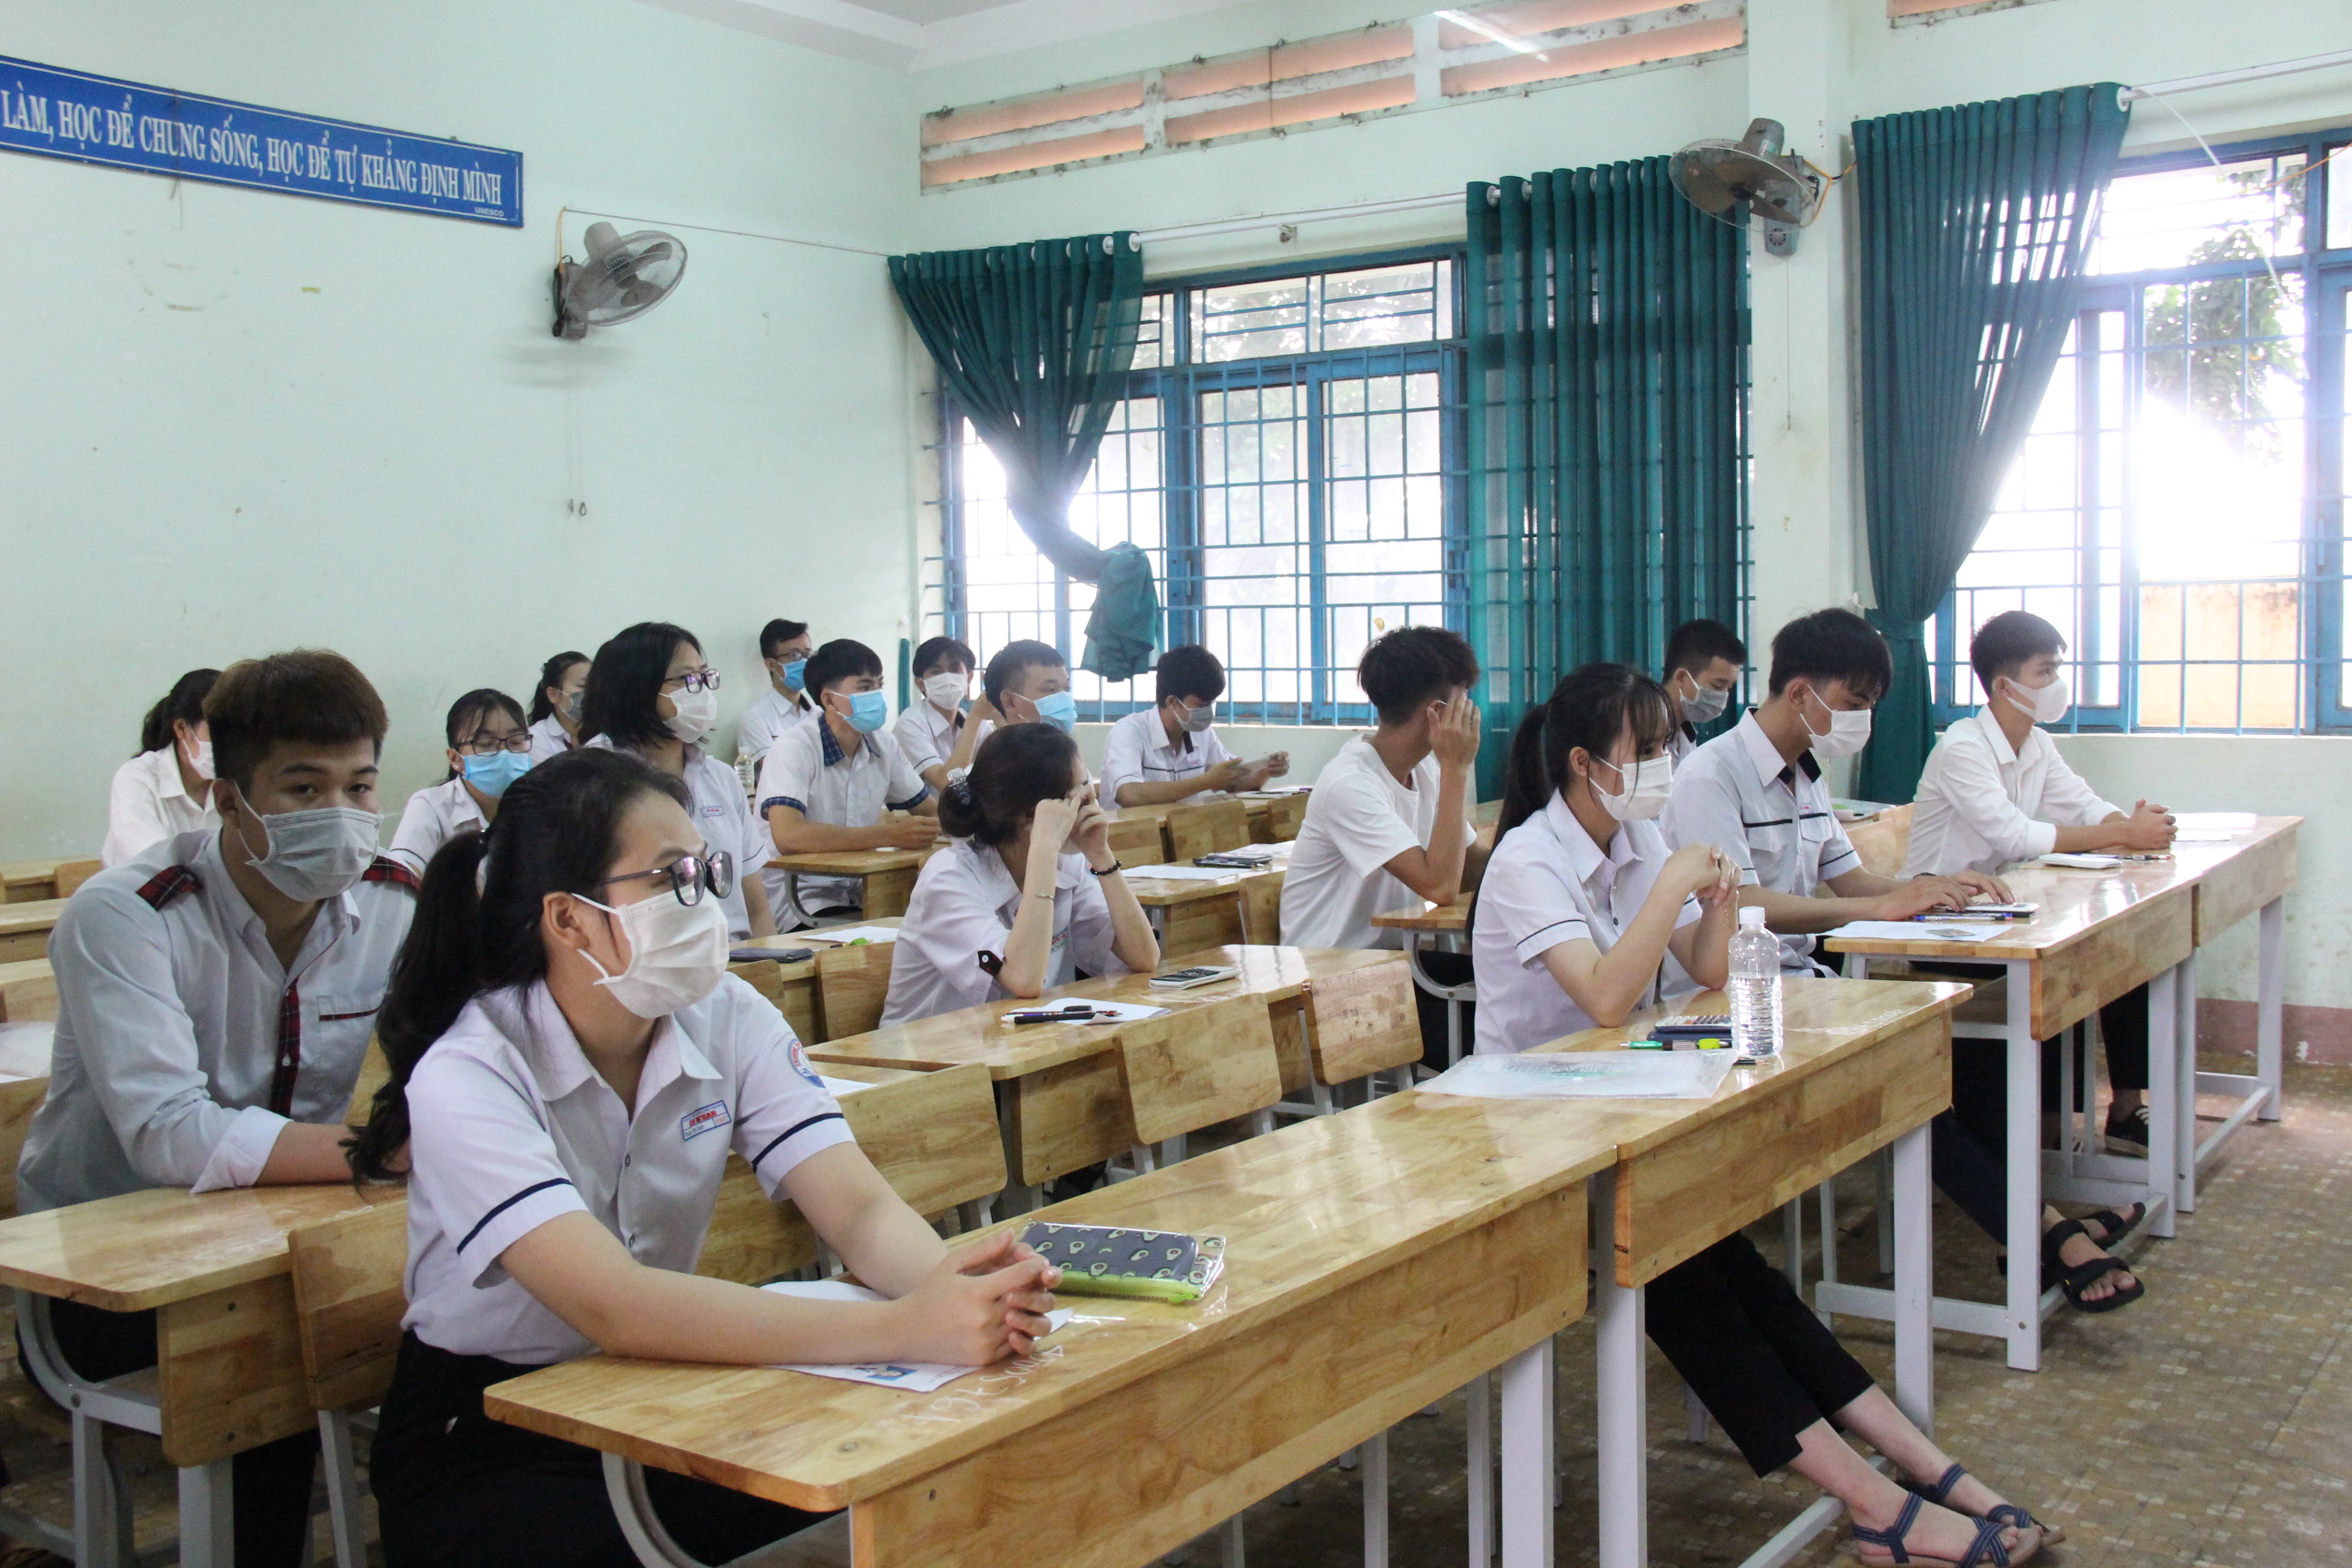 97.01%  pass the 2021 graduation examination for senior high school in Dak Lak Province